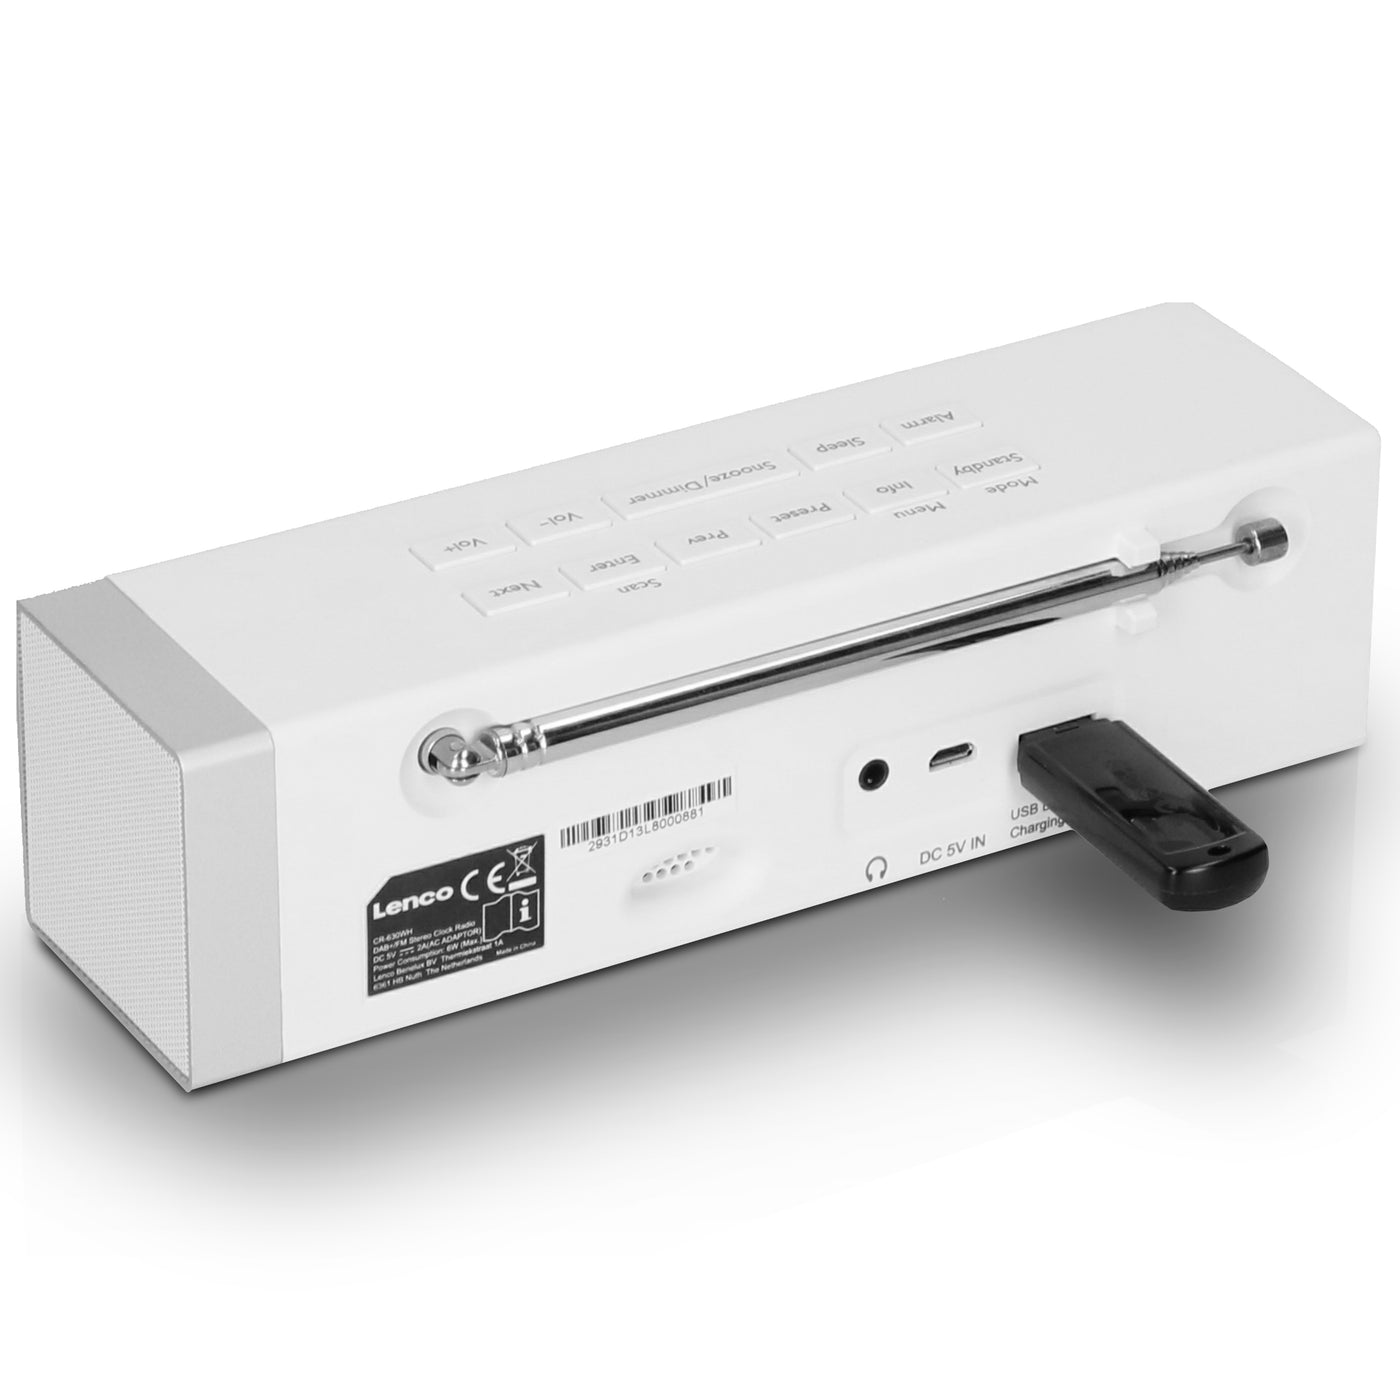 Lenco CR-630WH - Stereo DAB+/FM Radiowecker mit großem Display - USB-Anschluß mit Ladefunktion - 2 x 2 Watt RMS - Weiß